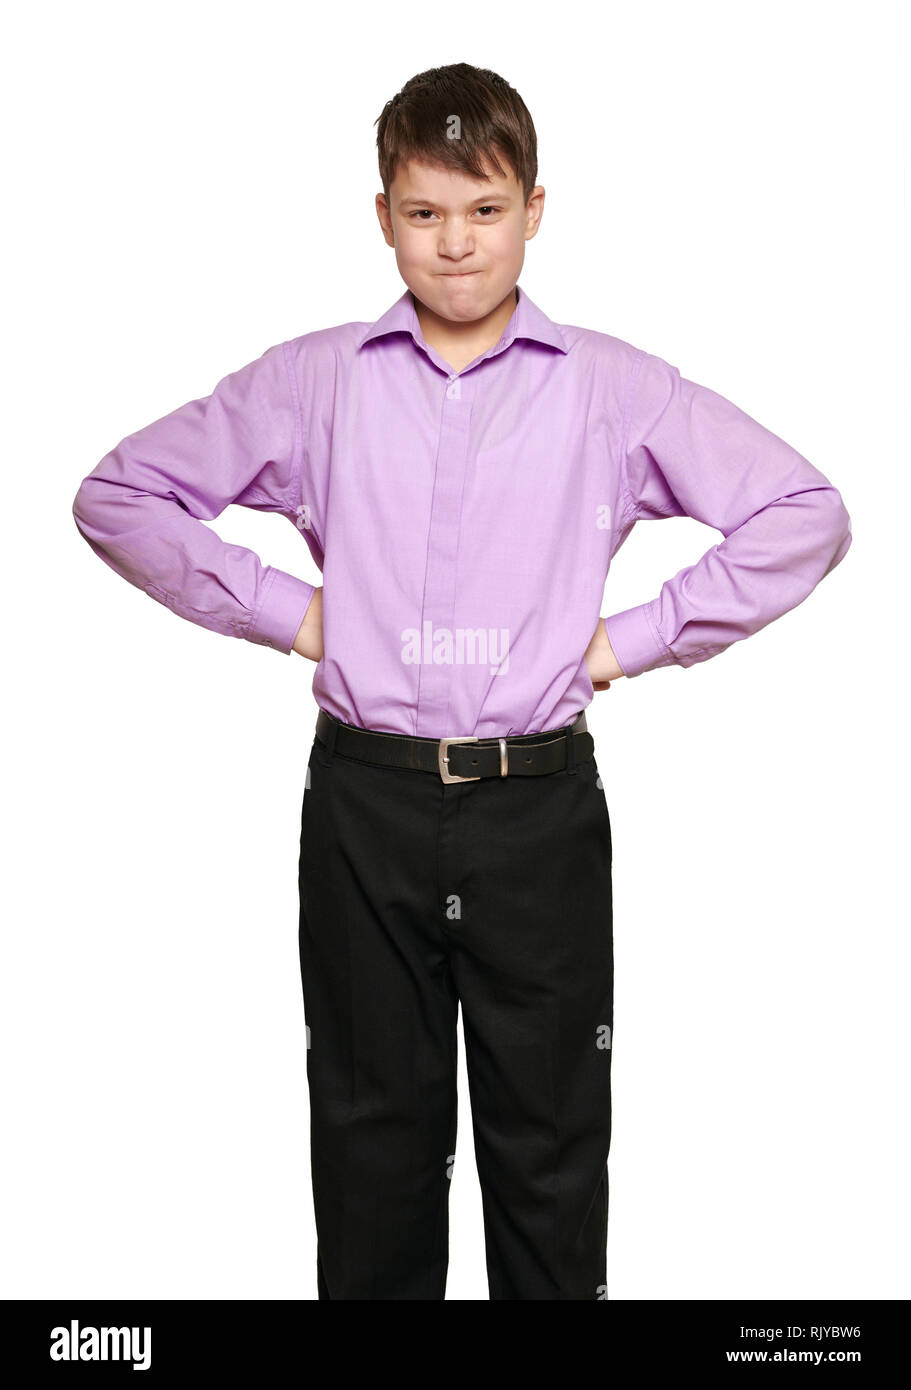 Next Look Men Self Design Formal Purple Shirt - Buy Next Look Men Self  Design Formal Purple Shirt Online at Best Prices in India | Flipkart.com